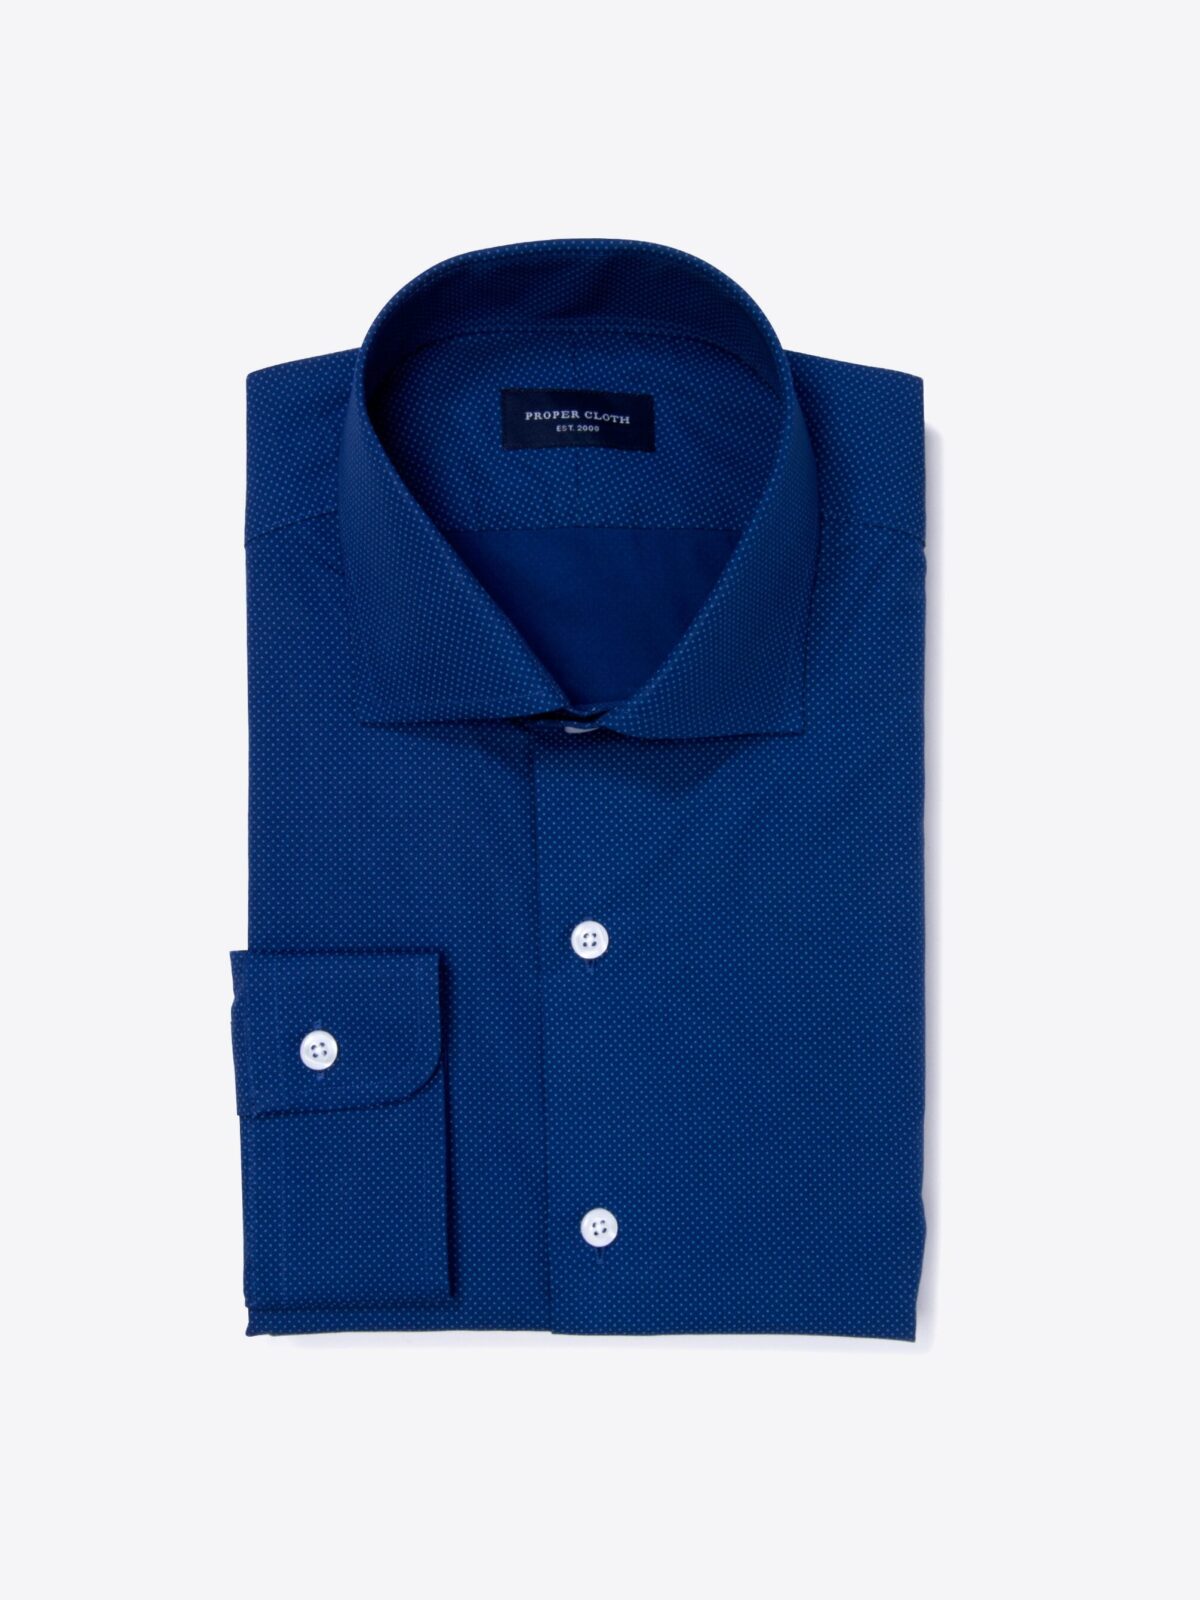 Blue and Light Blue Pindot Custom Dress Shirt Shirt by Proper Cloth